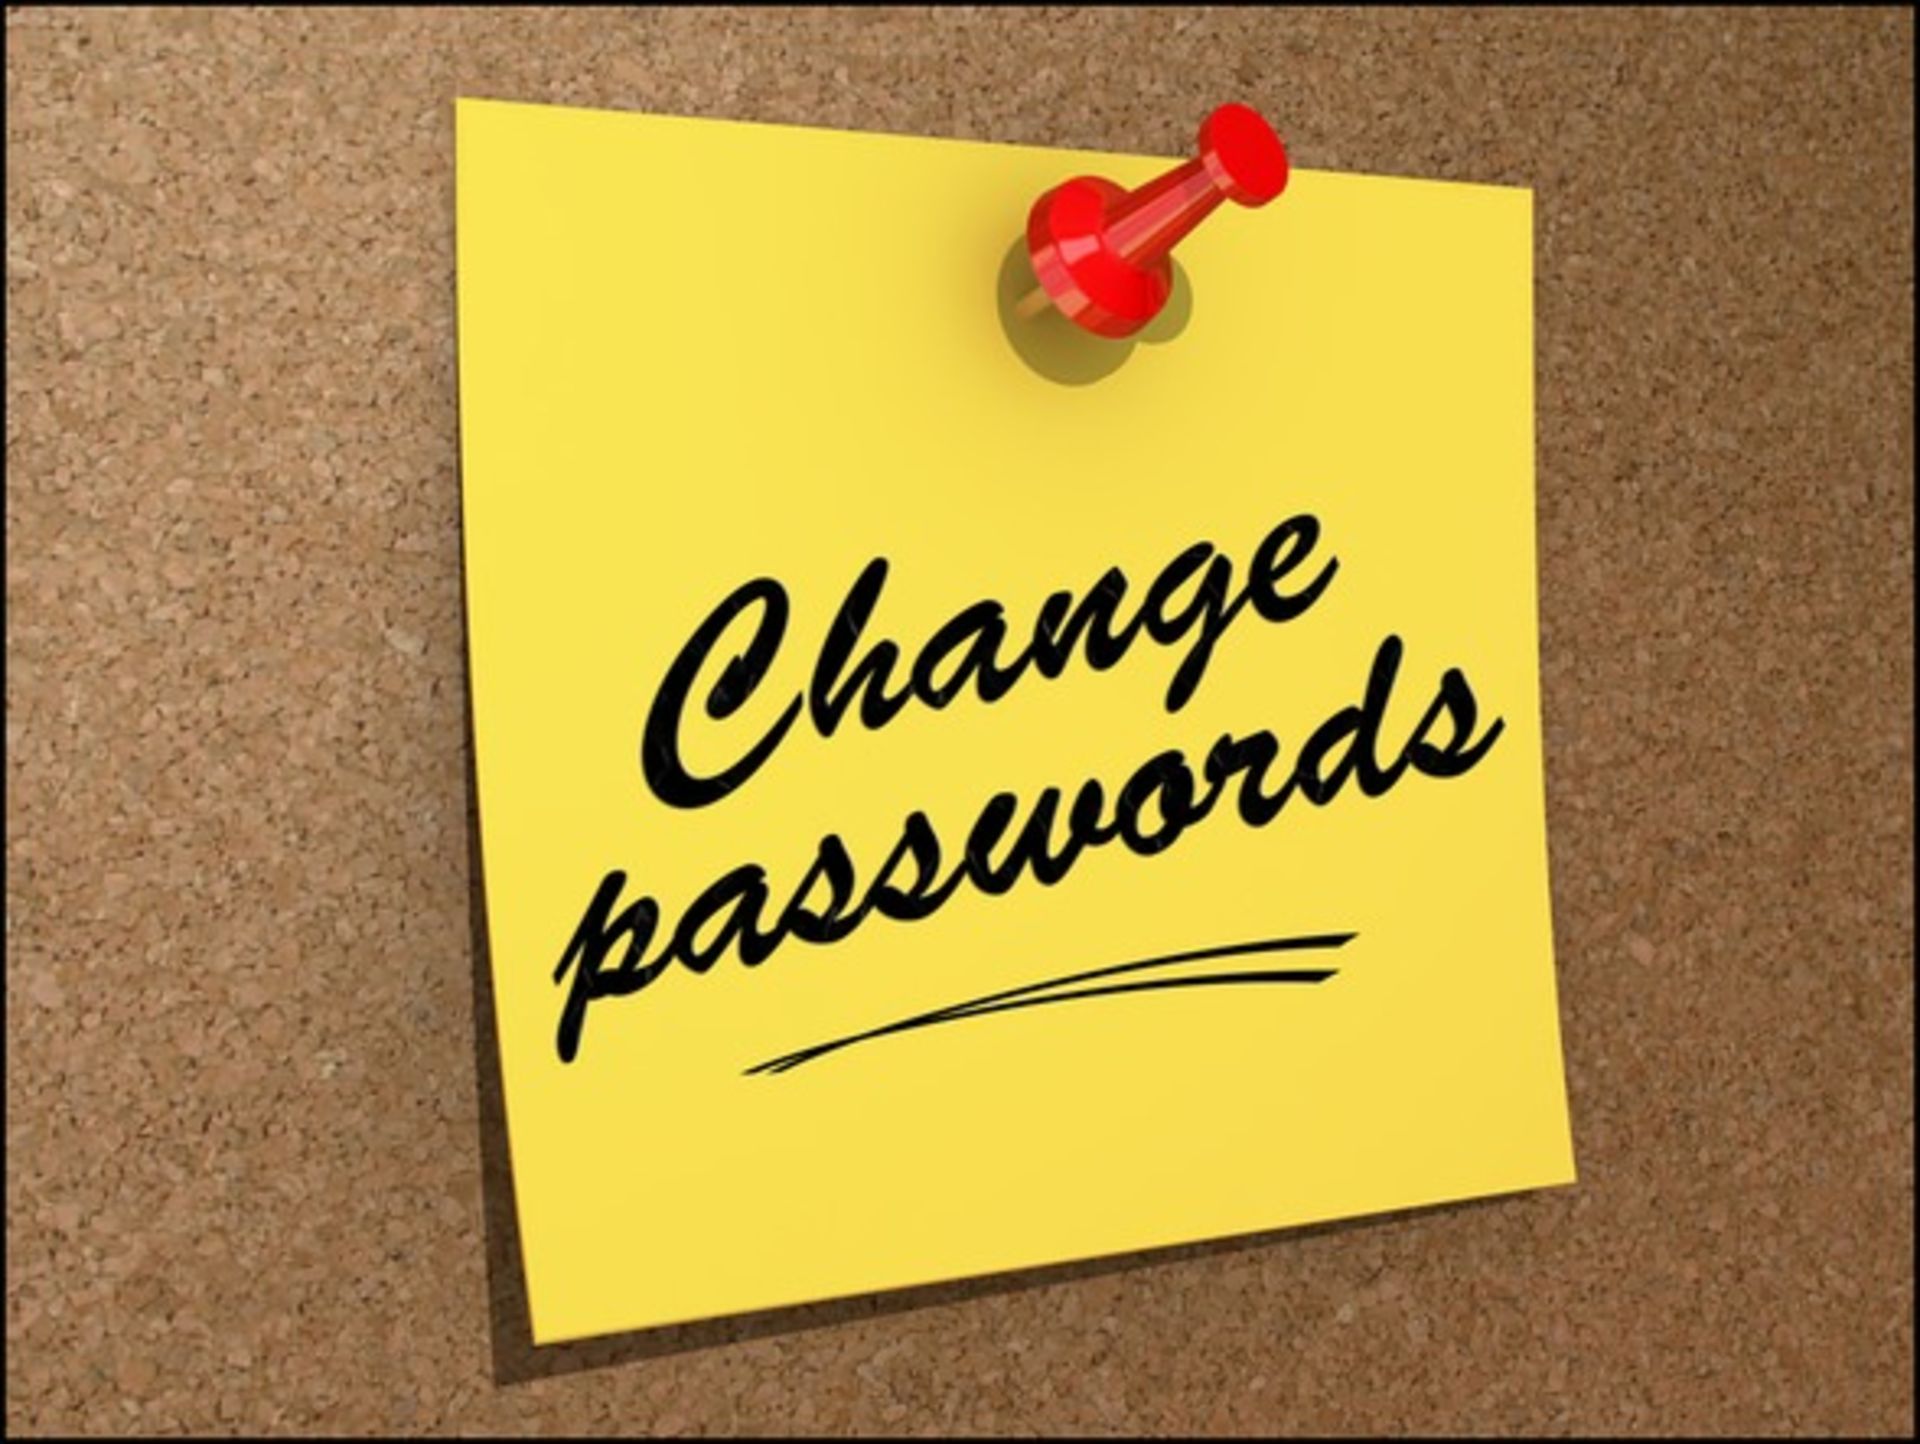 17-Change-passwords